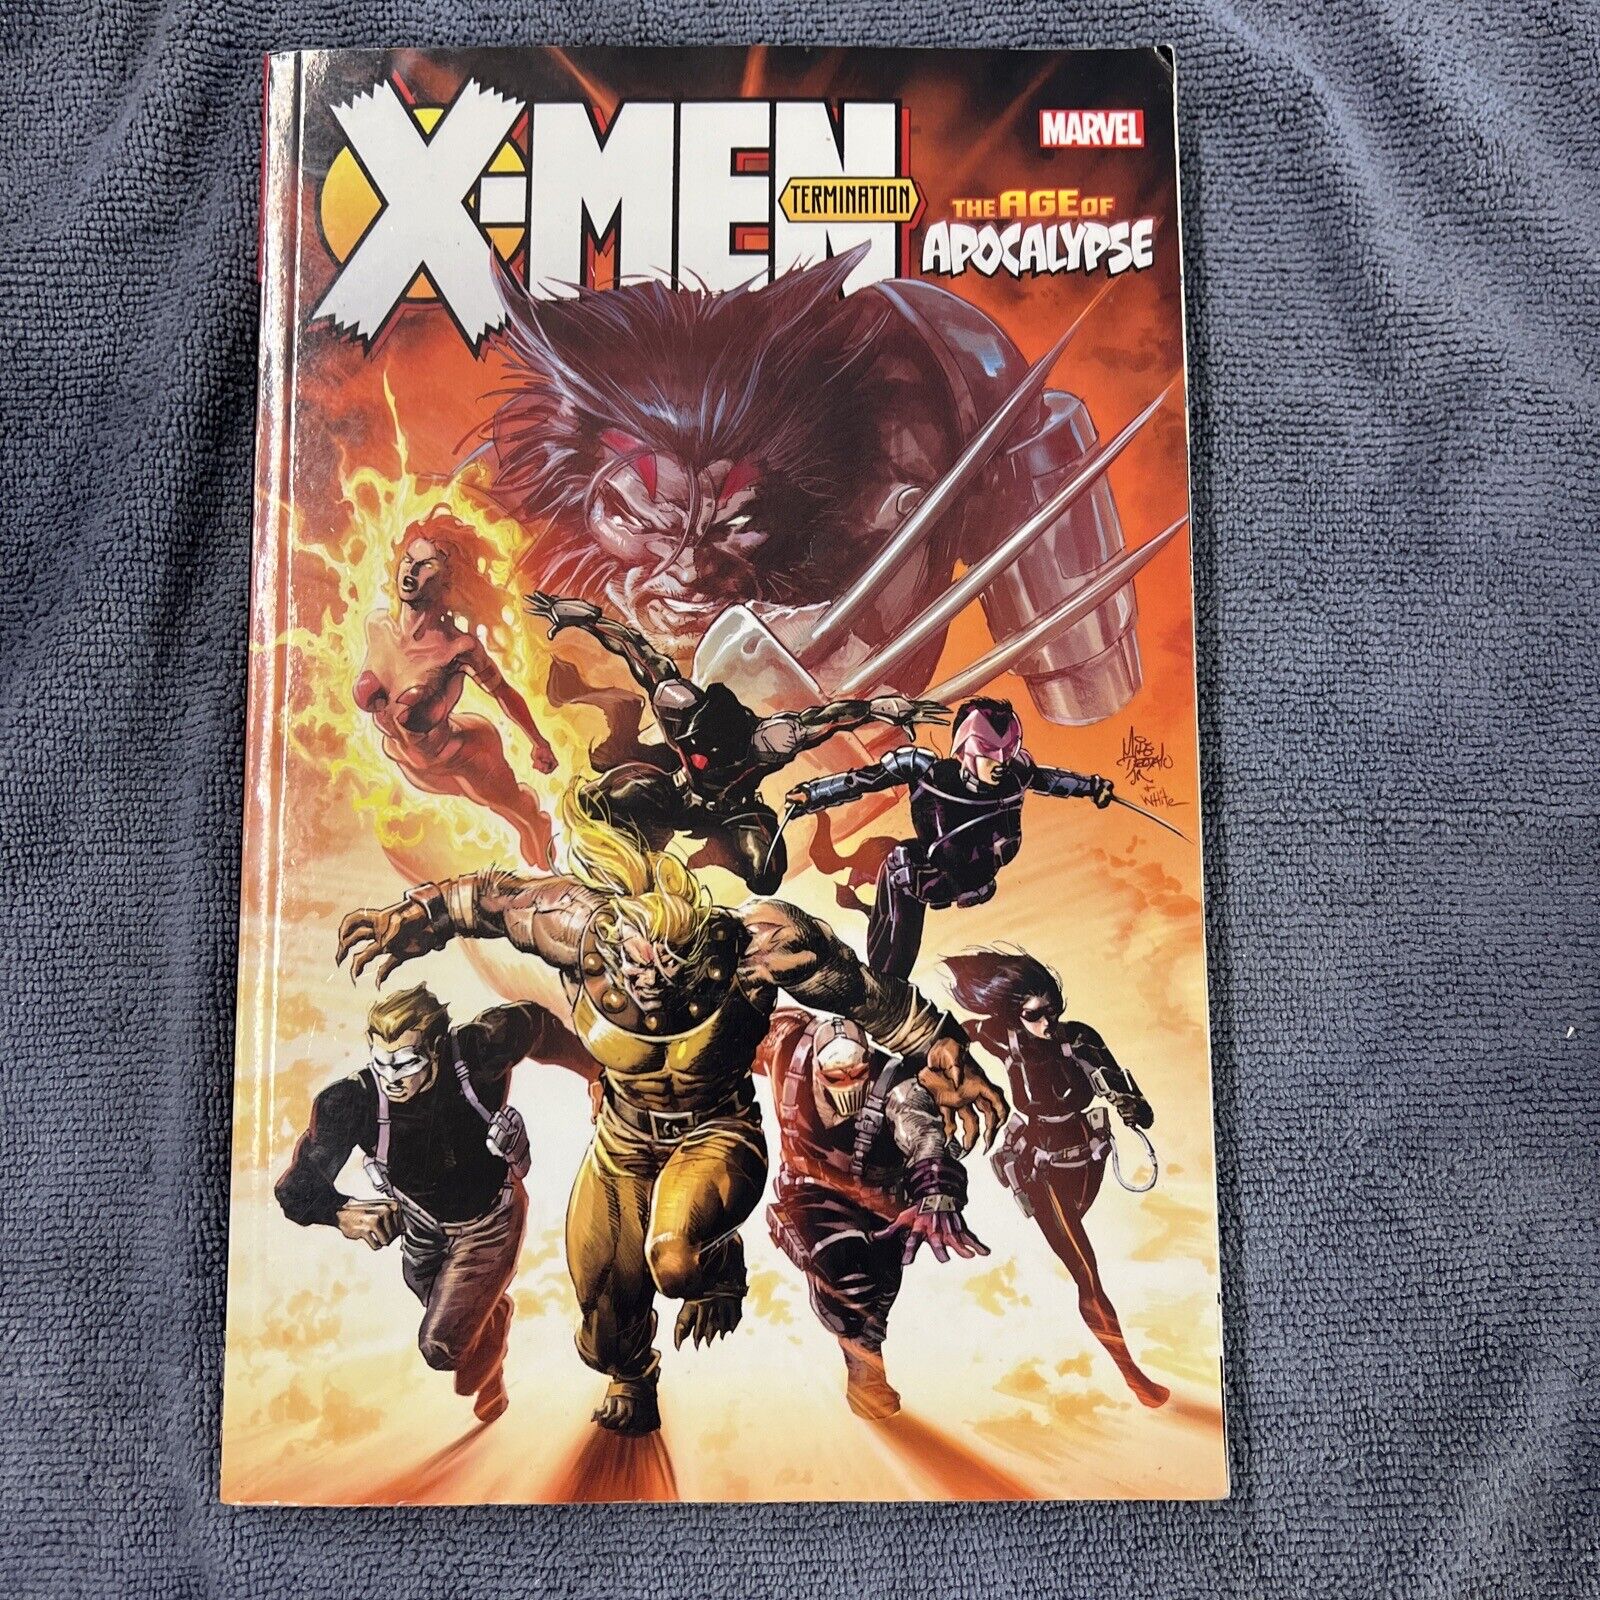 X-Men: Age of Apocalypse - Termination - Marvel, 2017 - Trade Paperback